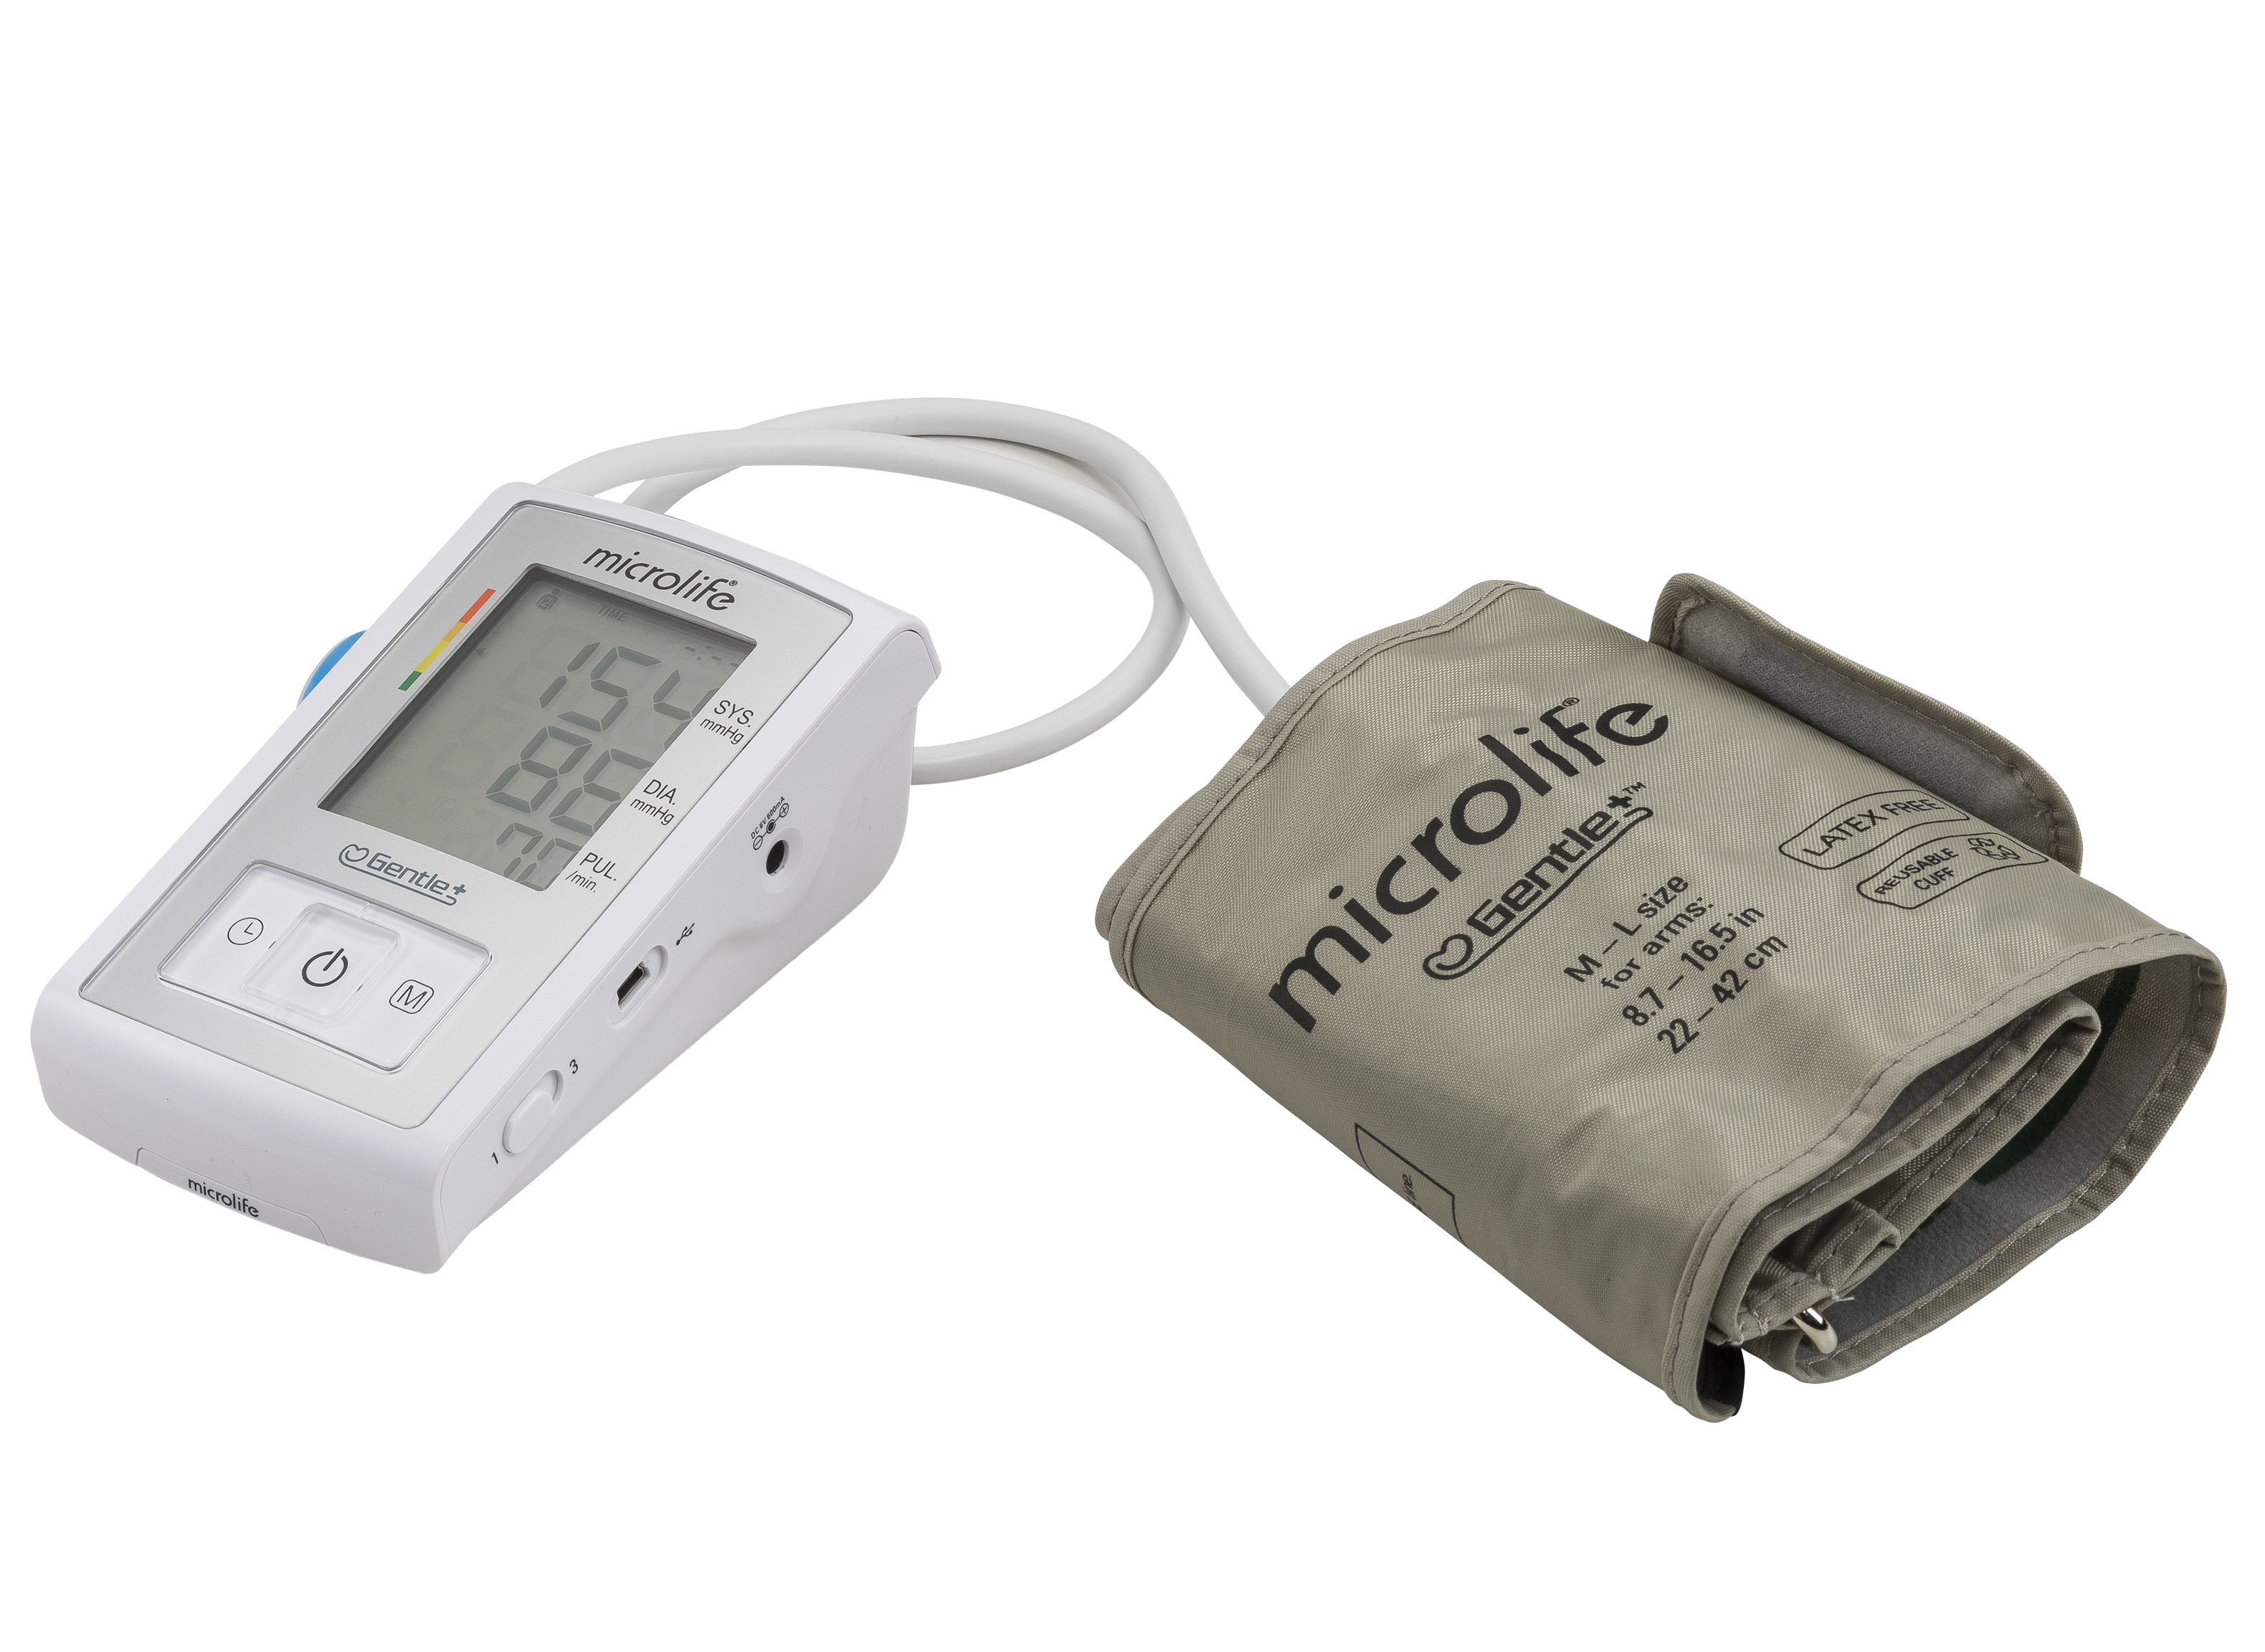 Microlife Premium BP3GX1-5A (Costco exclusive) Blood Pressure